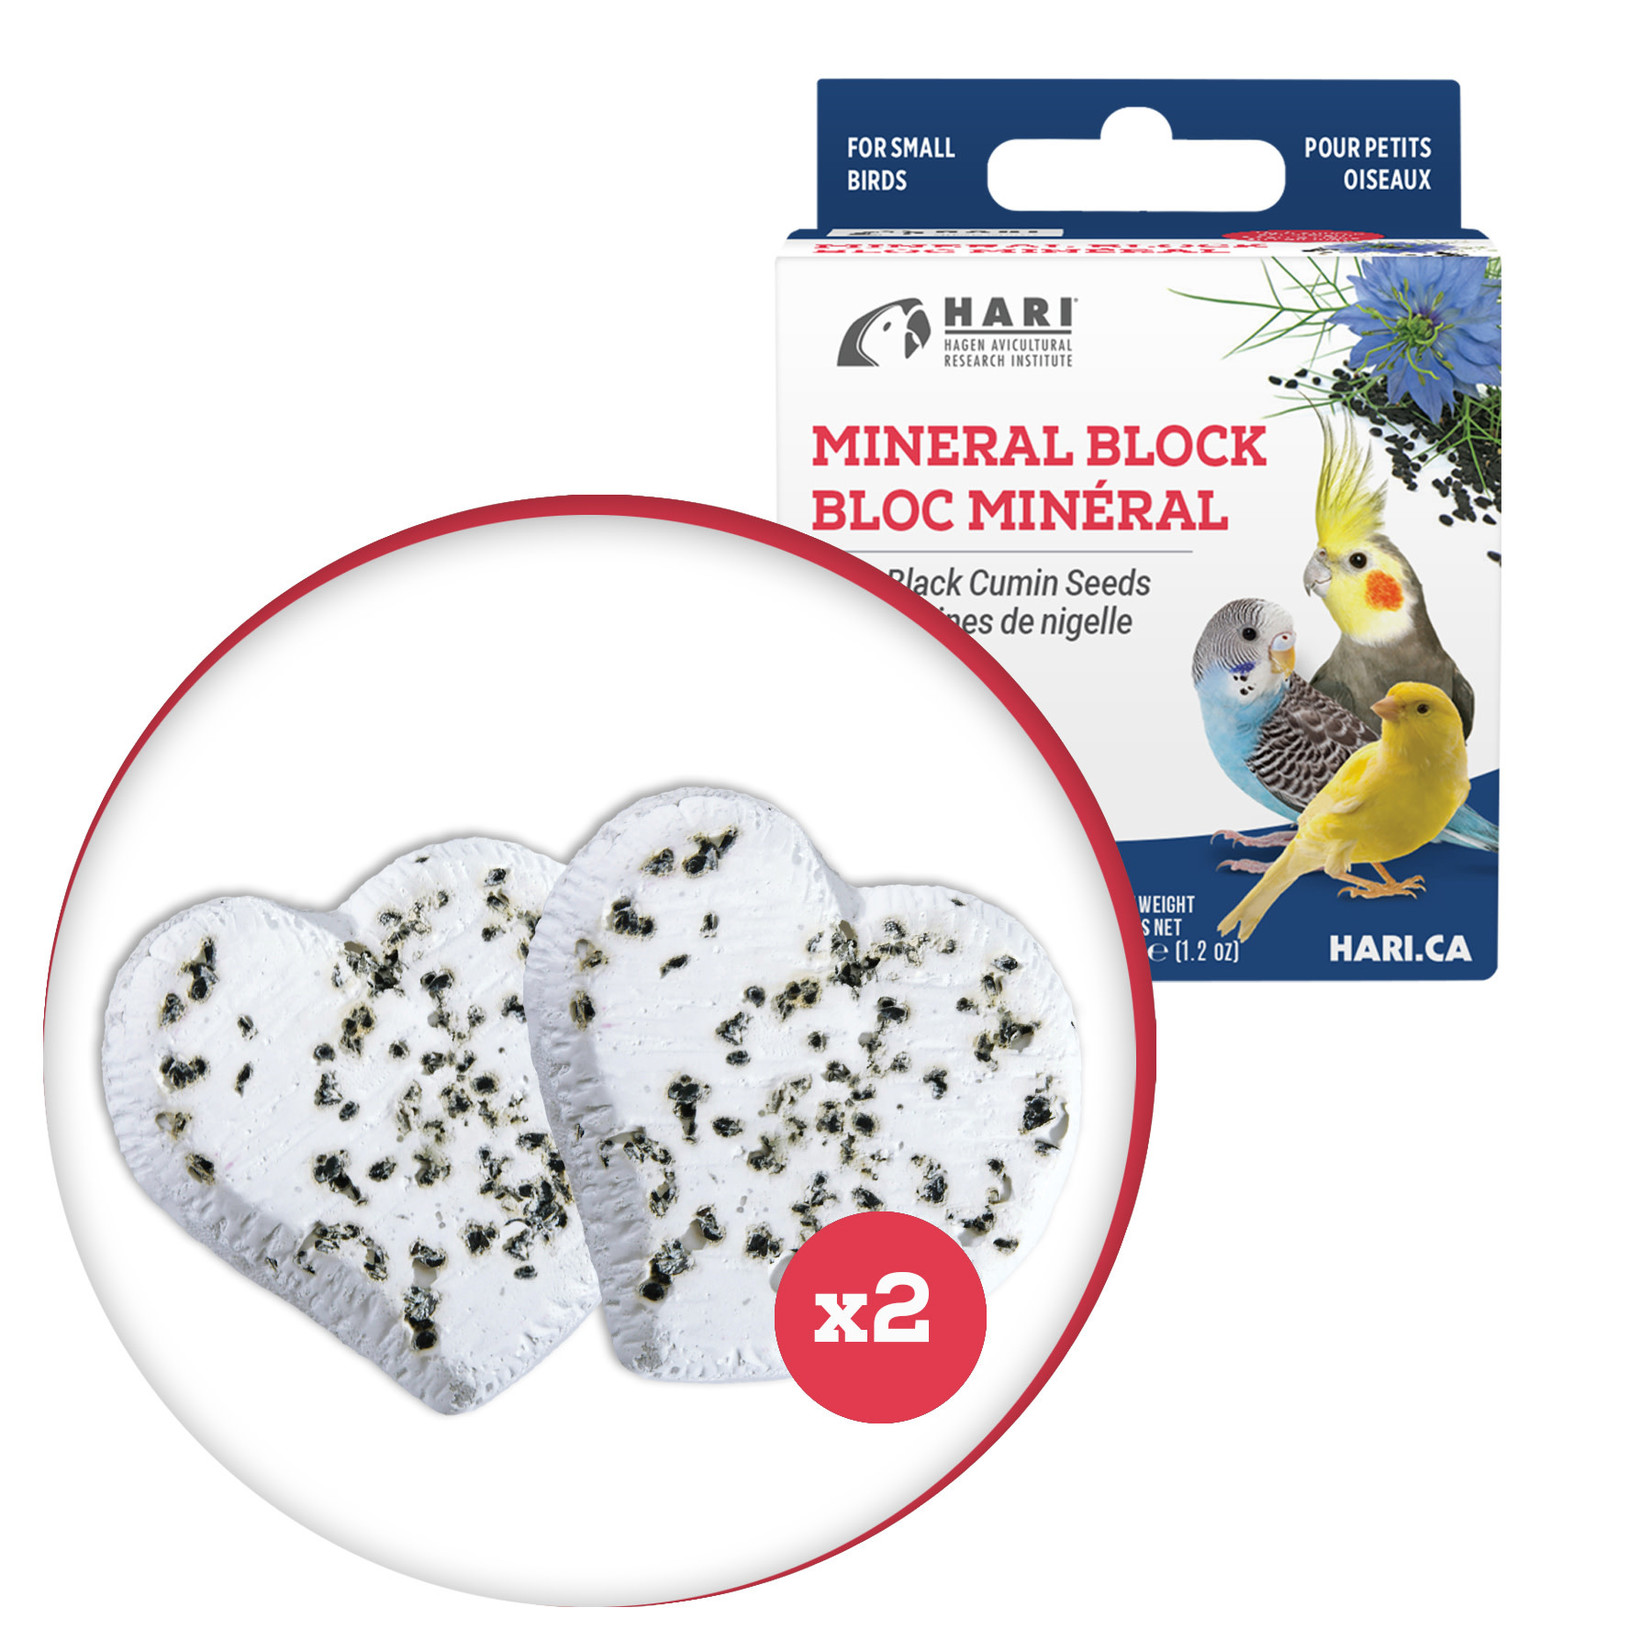 HARI HARI Mineral Block for Small Birds - Black Cumin Seeds - 35 g - 2 pack